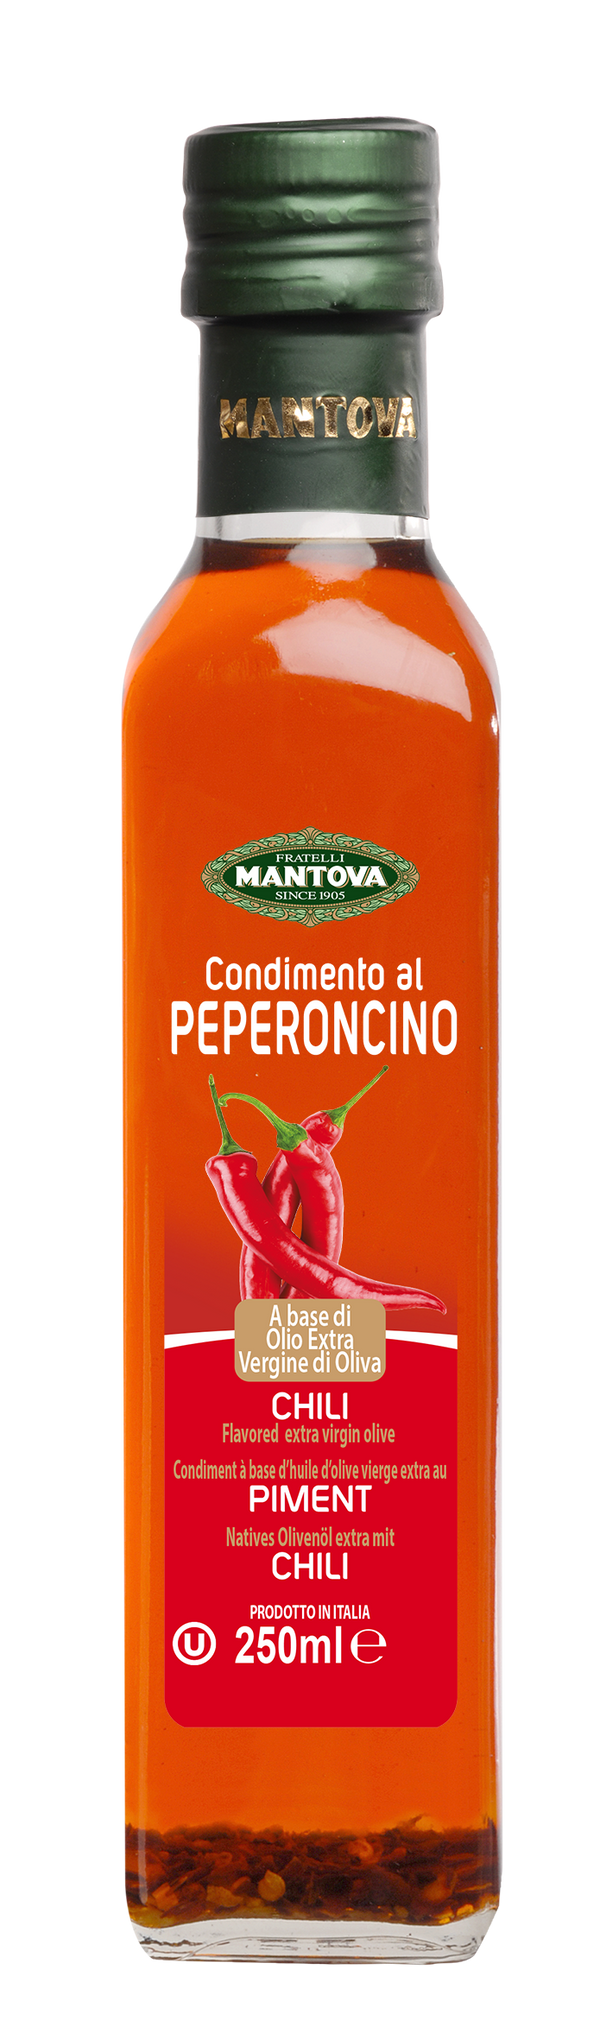 Fratelli Mantova Peperoncino spray in olio extravergine di oliva